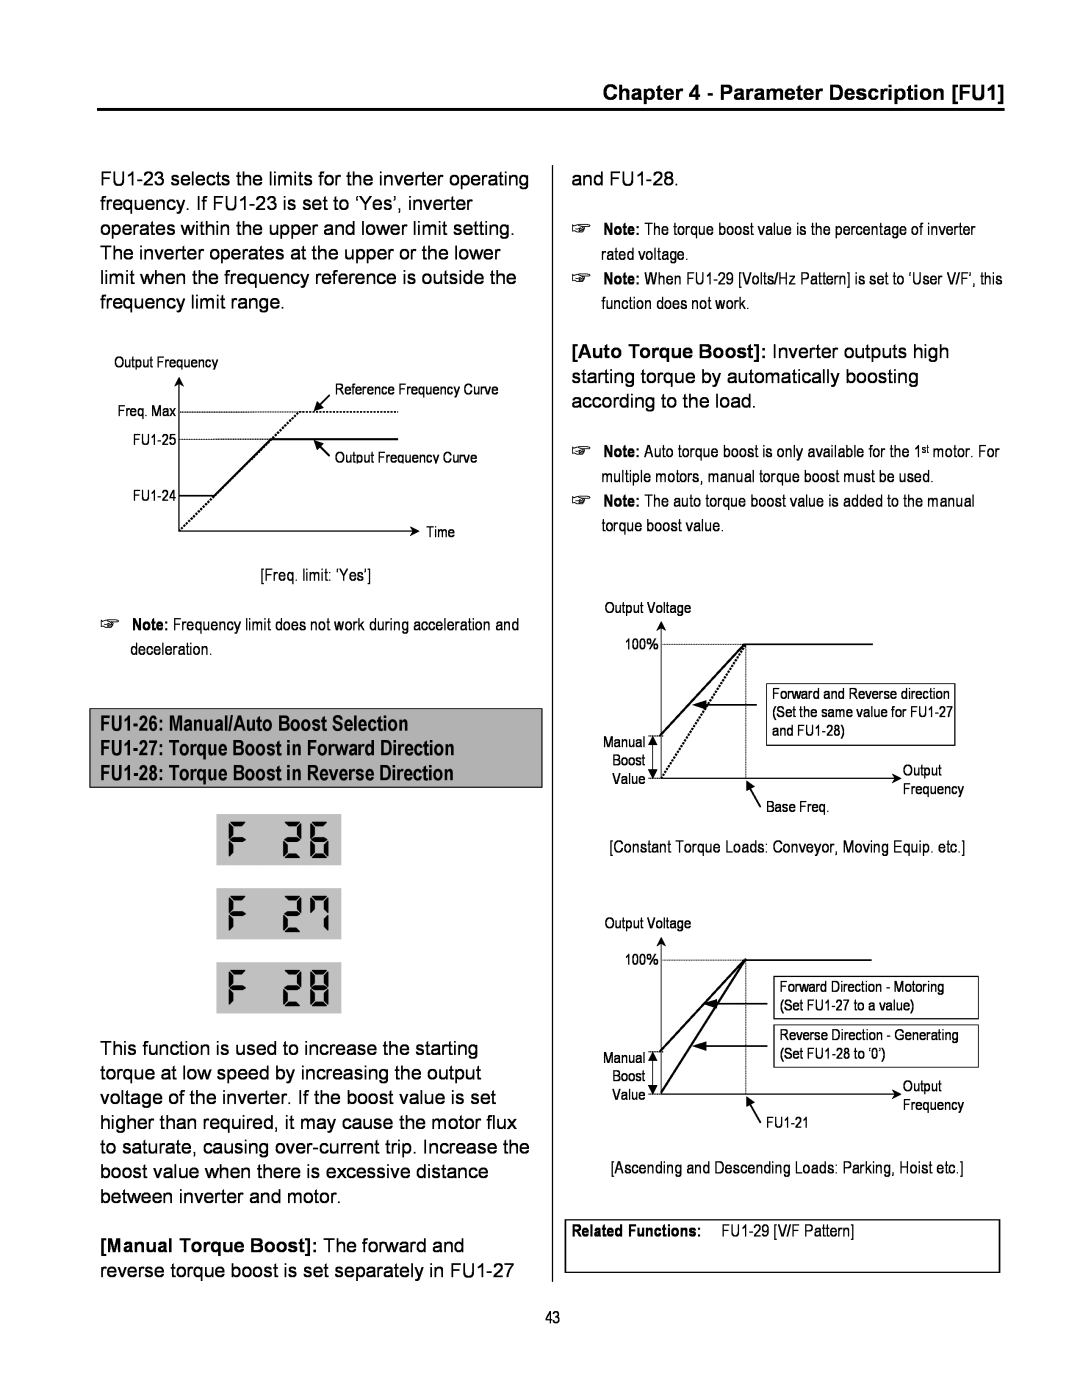 Cleveland Range inverter manual Parameter Description FU1, FU1-26 Manual/Auto Boost Selection 